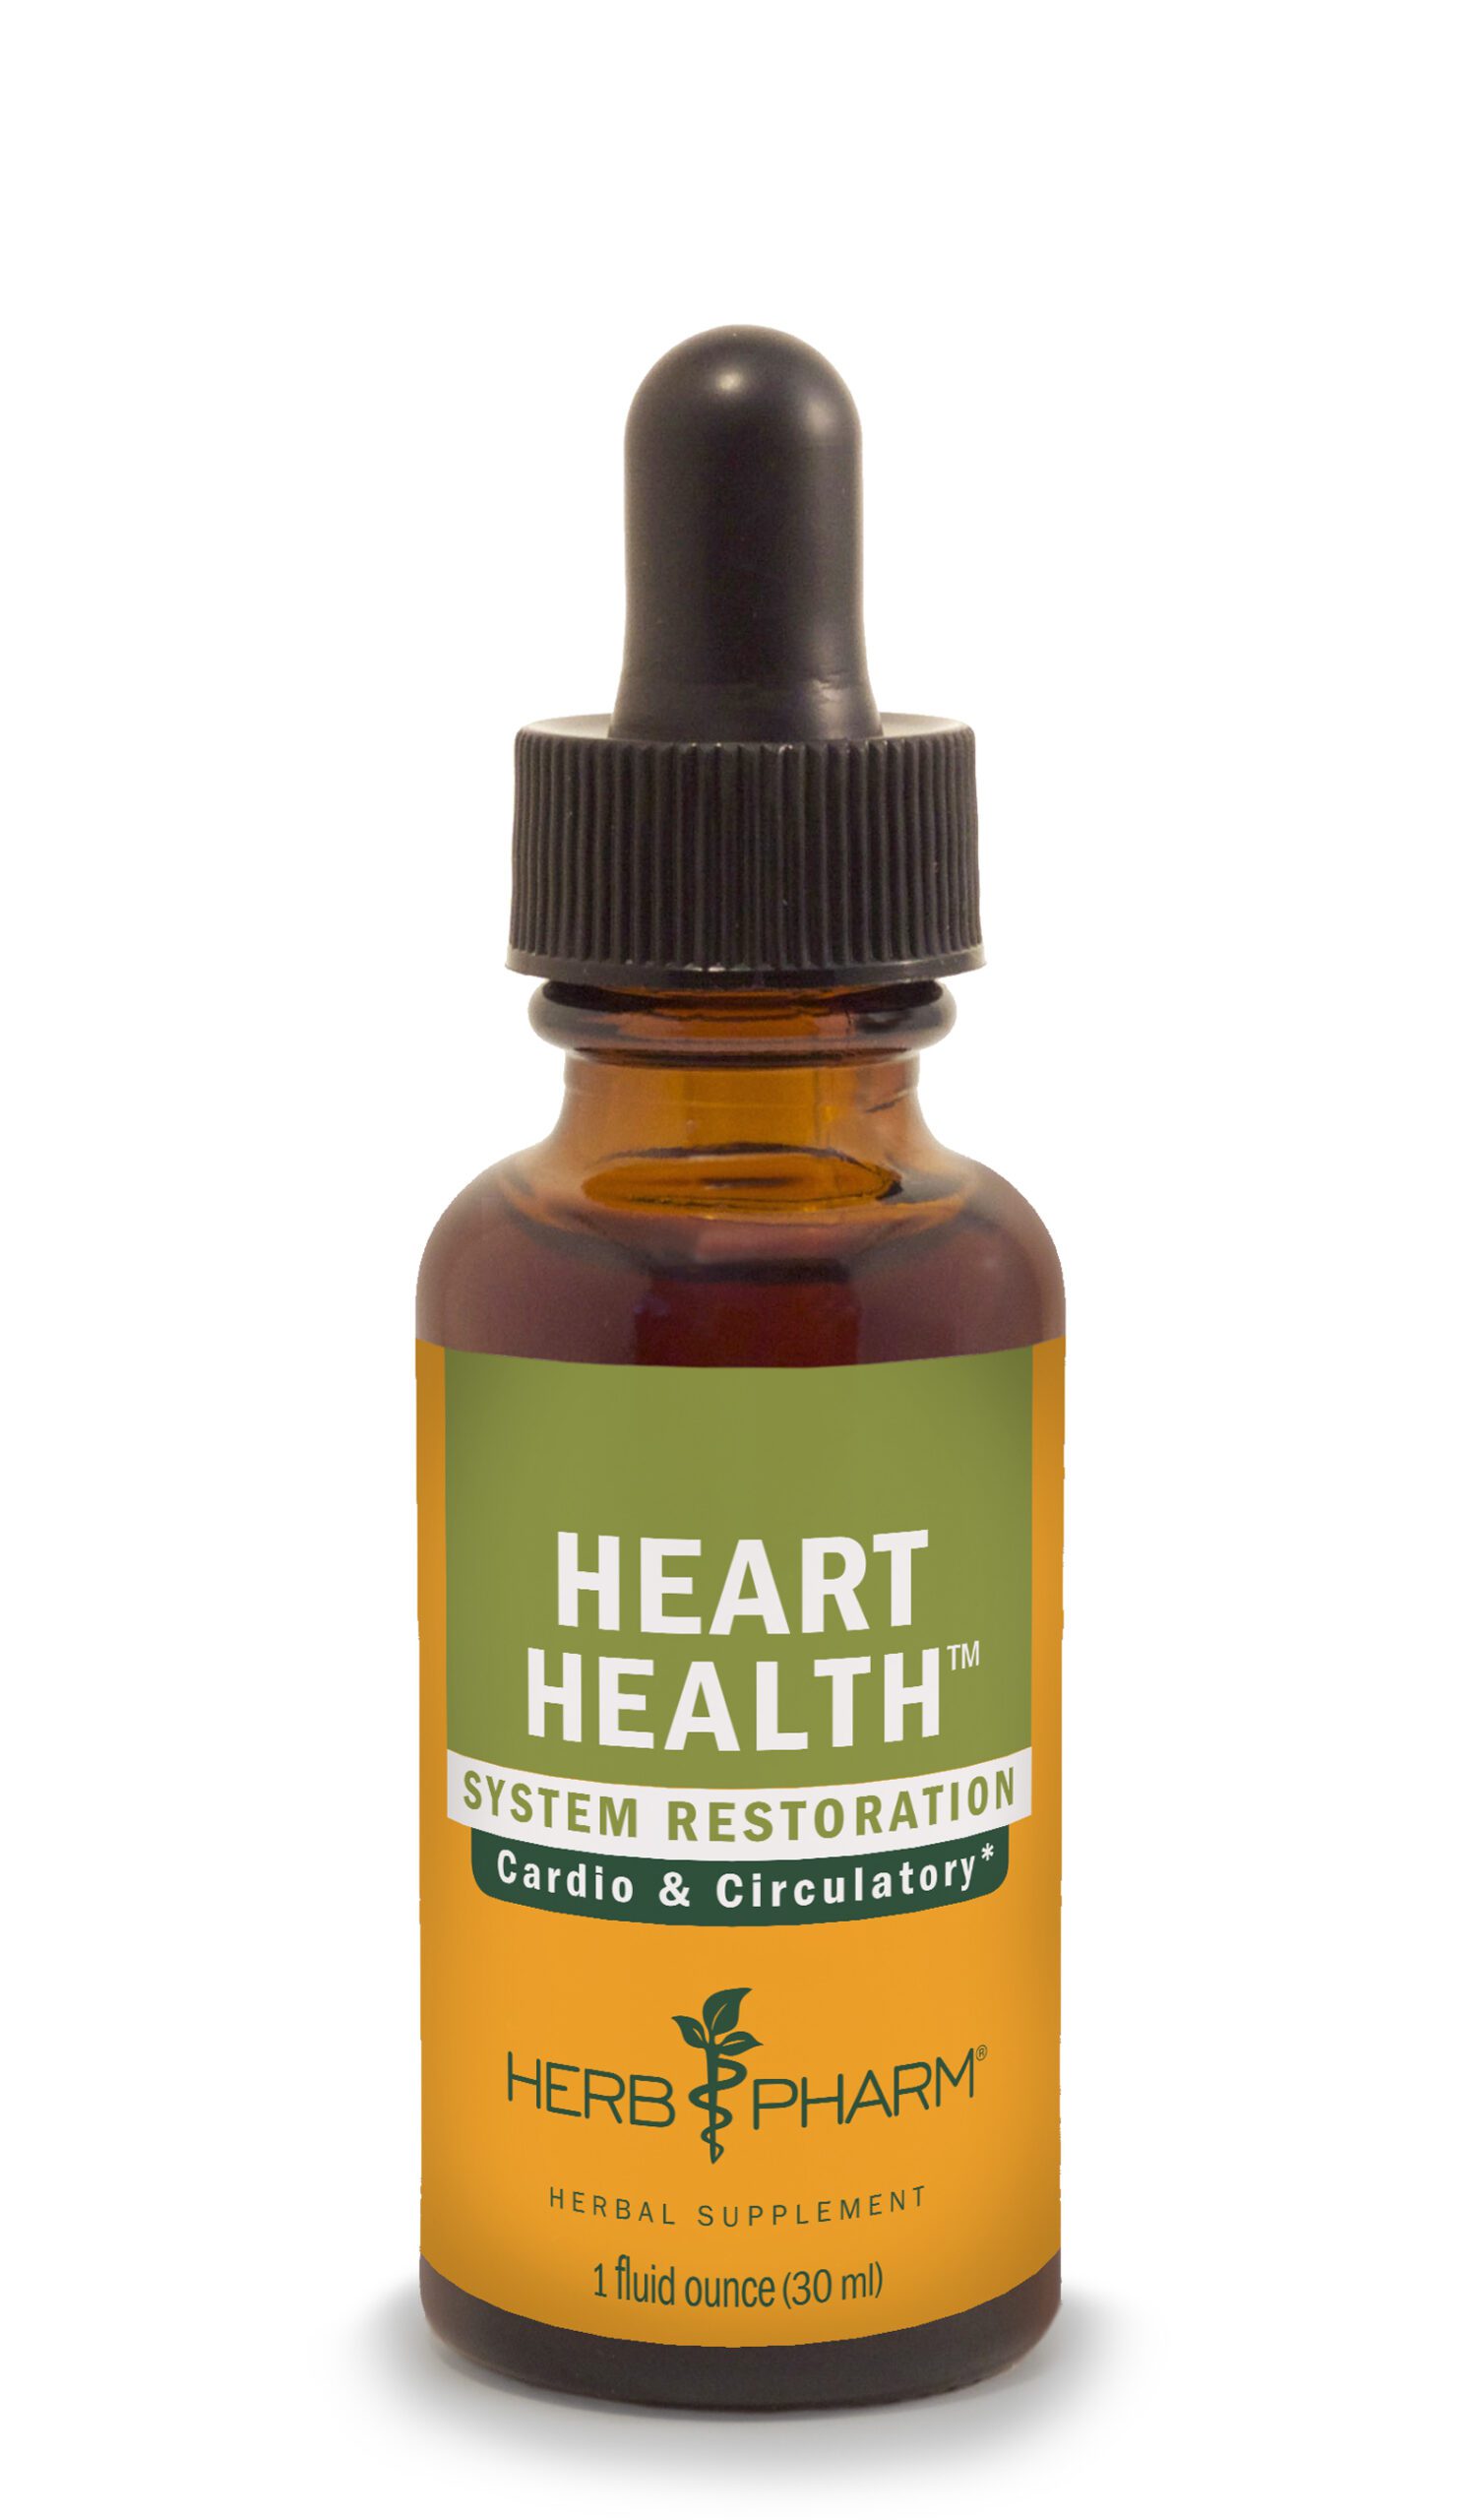 Product Listing Image for Herb Pharm Heart Health Tonic 1oz